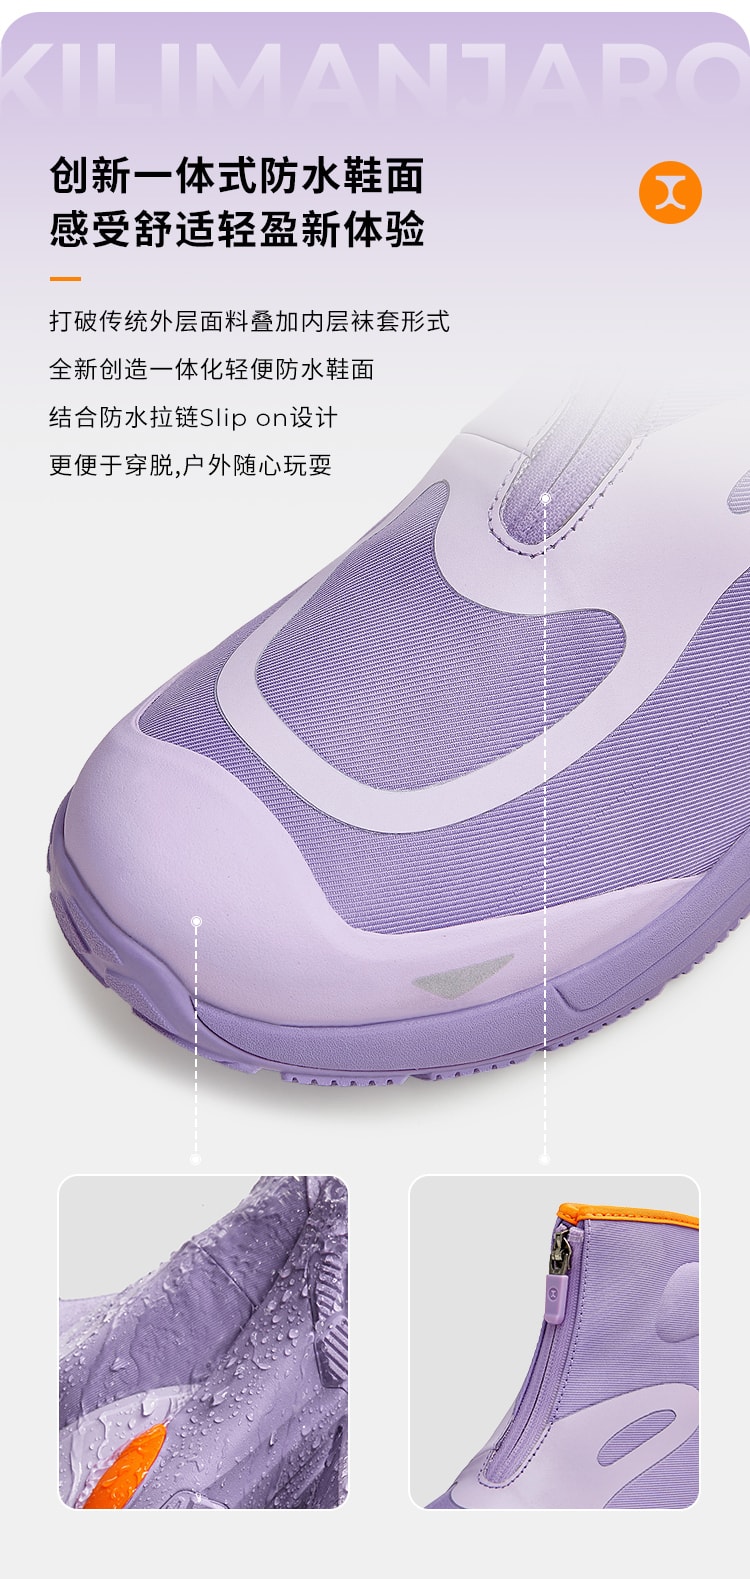 【中国直邮】moodytigerKilimanjaro 儿童鞋 深紫色 37